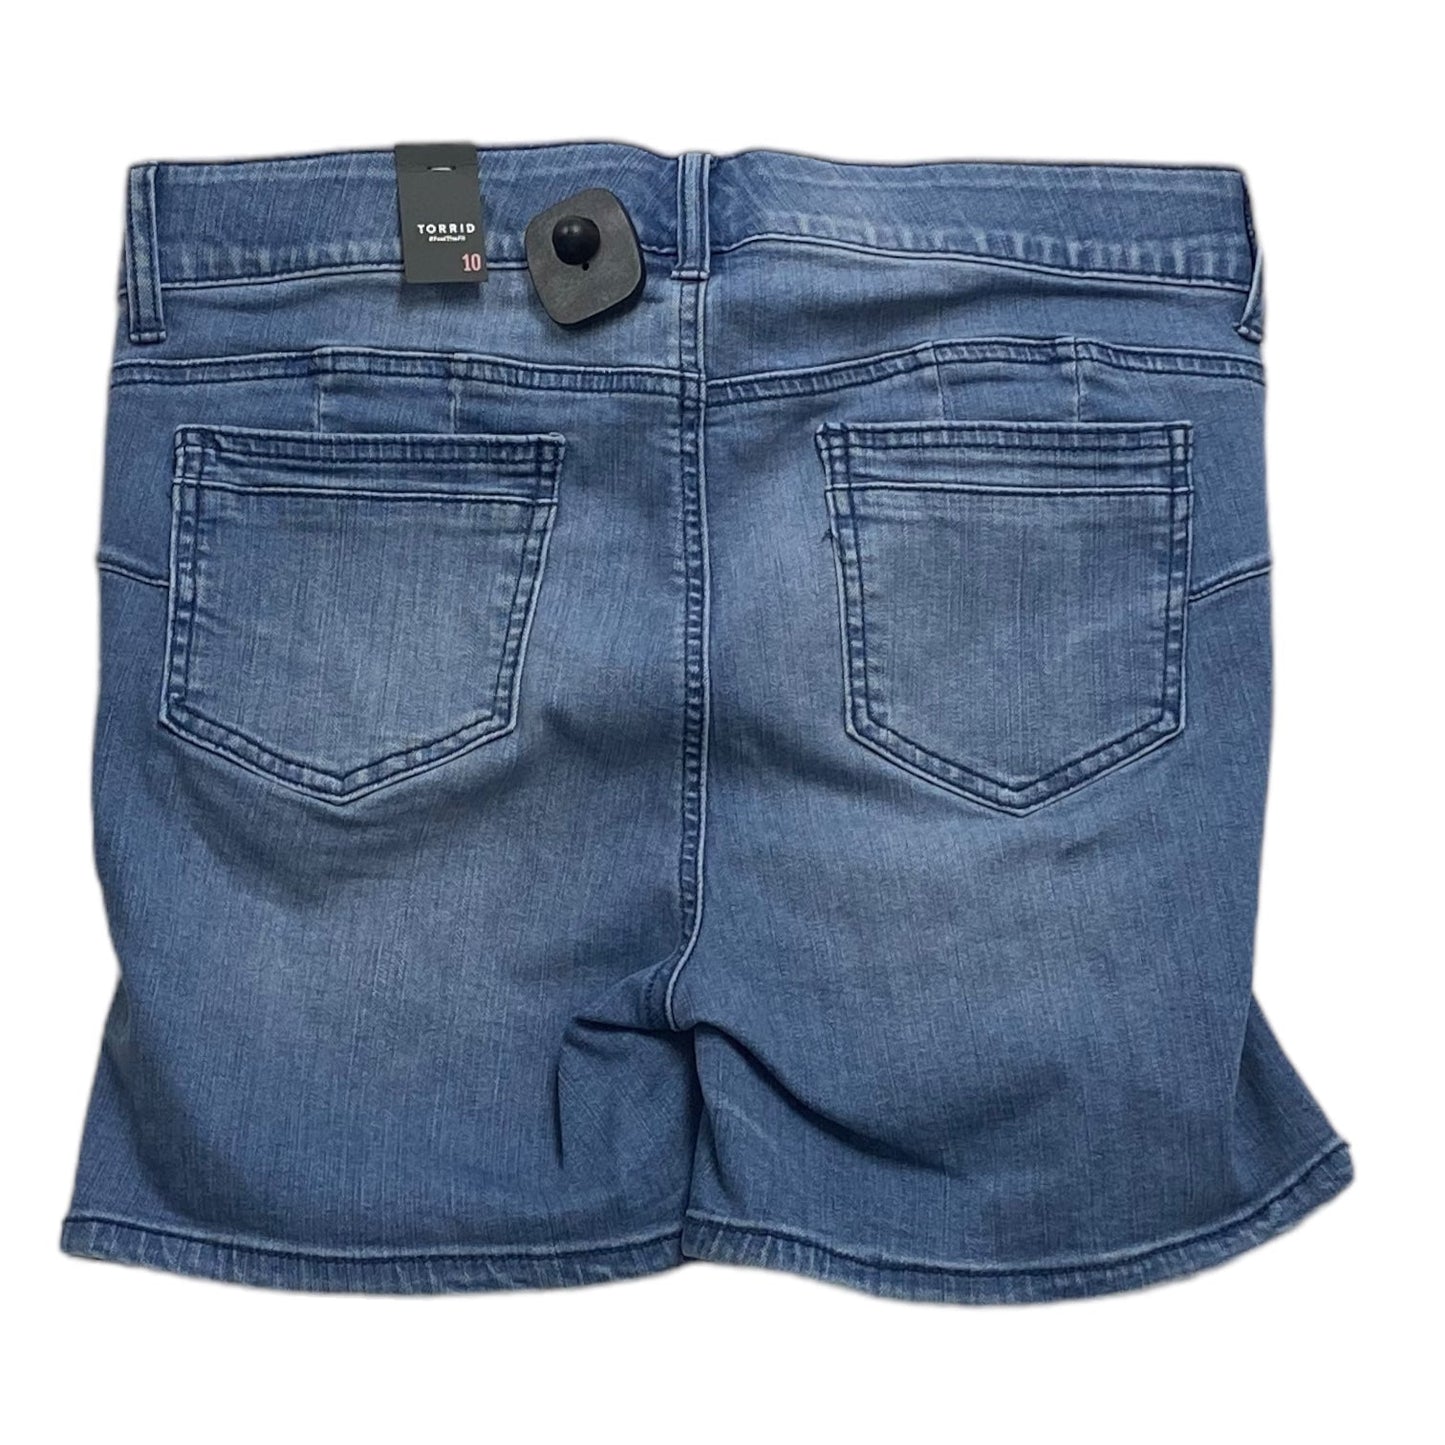 Blue Denim Shorts Torrid, Size 10